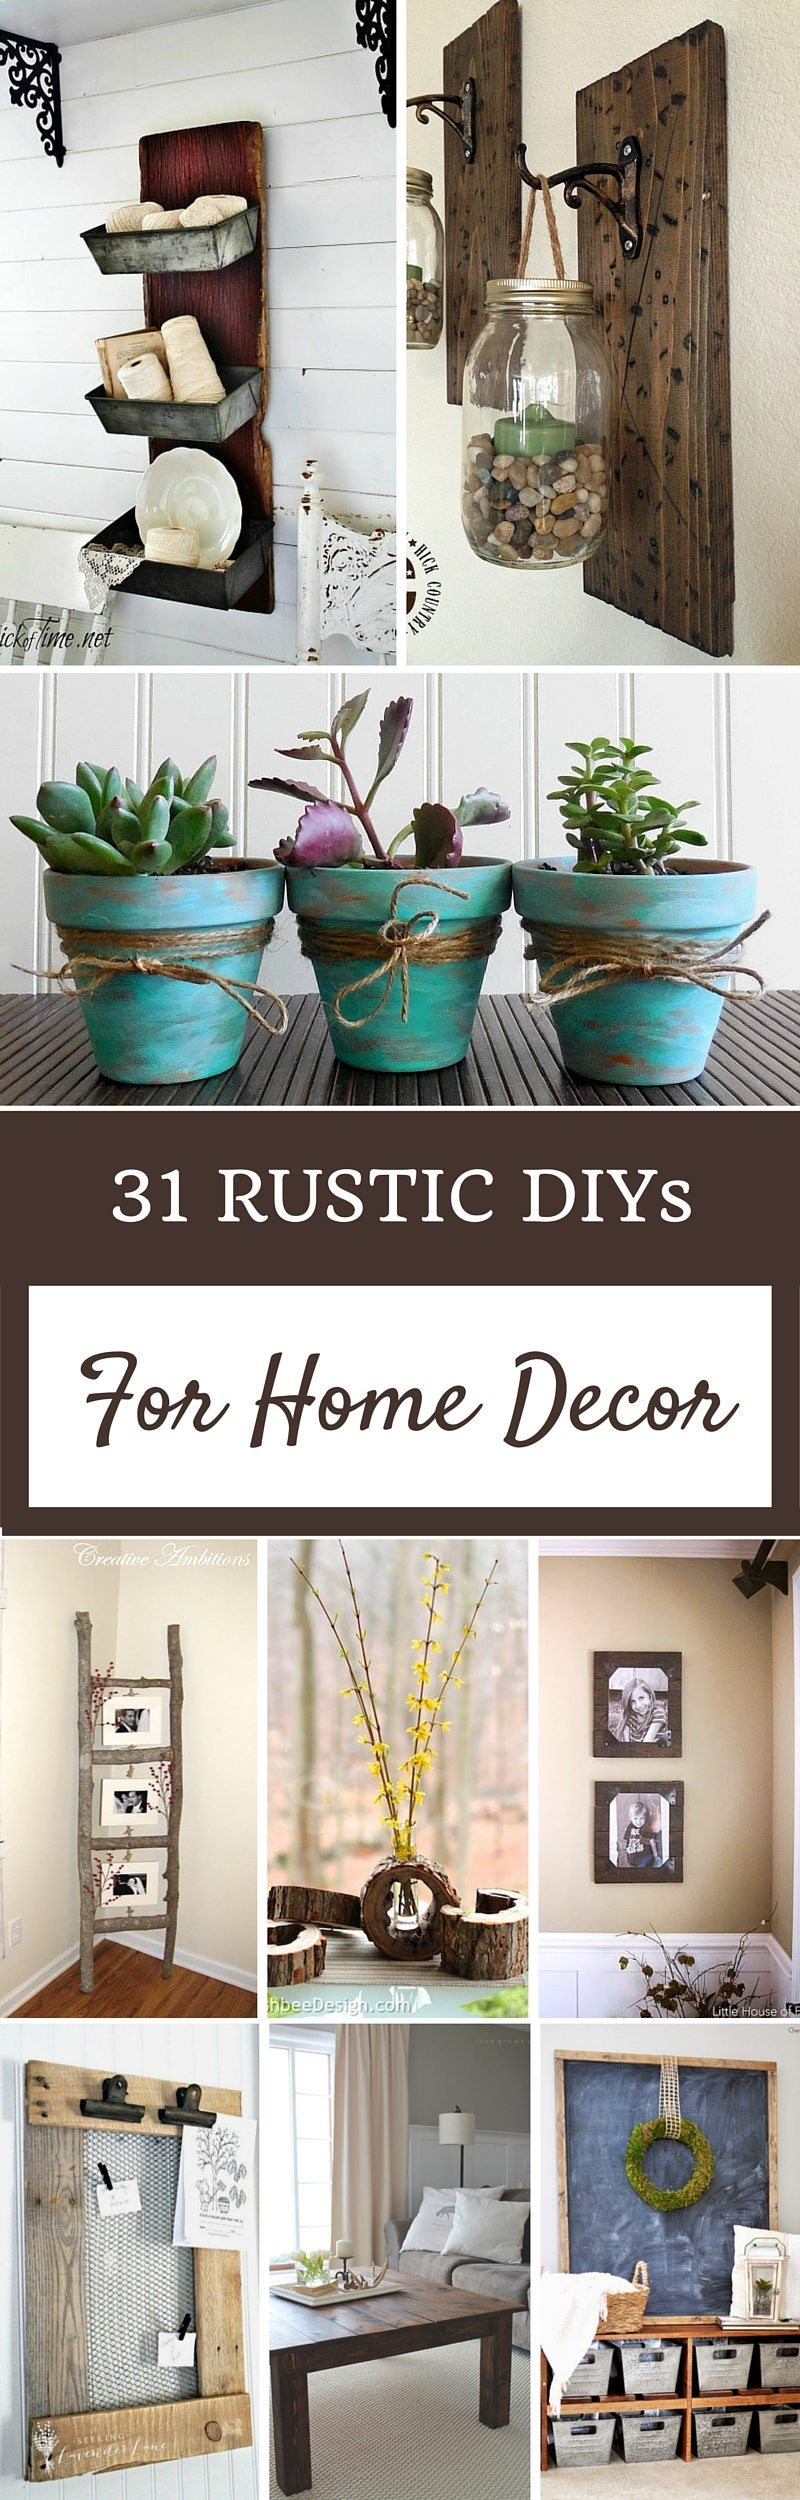 Pinterest Diy Home Decor
 Rustic Home Decor Ideas